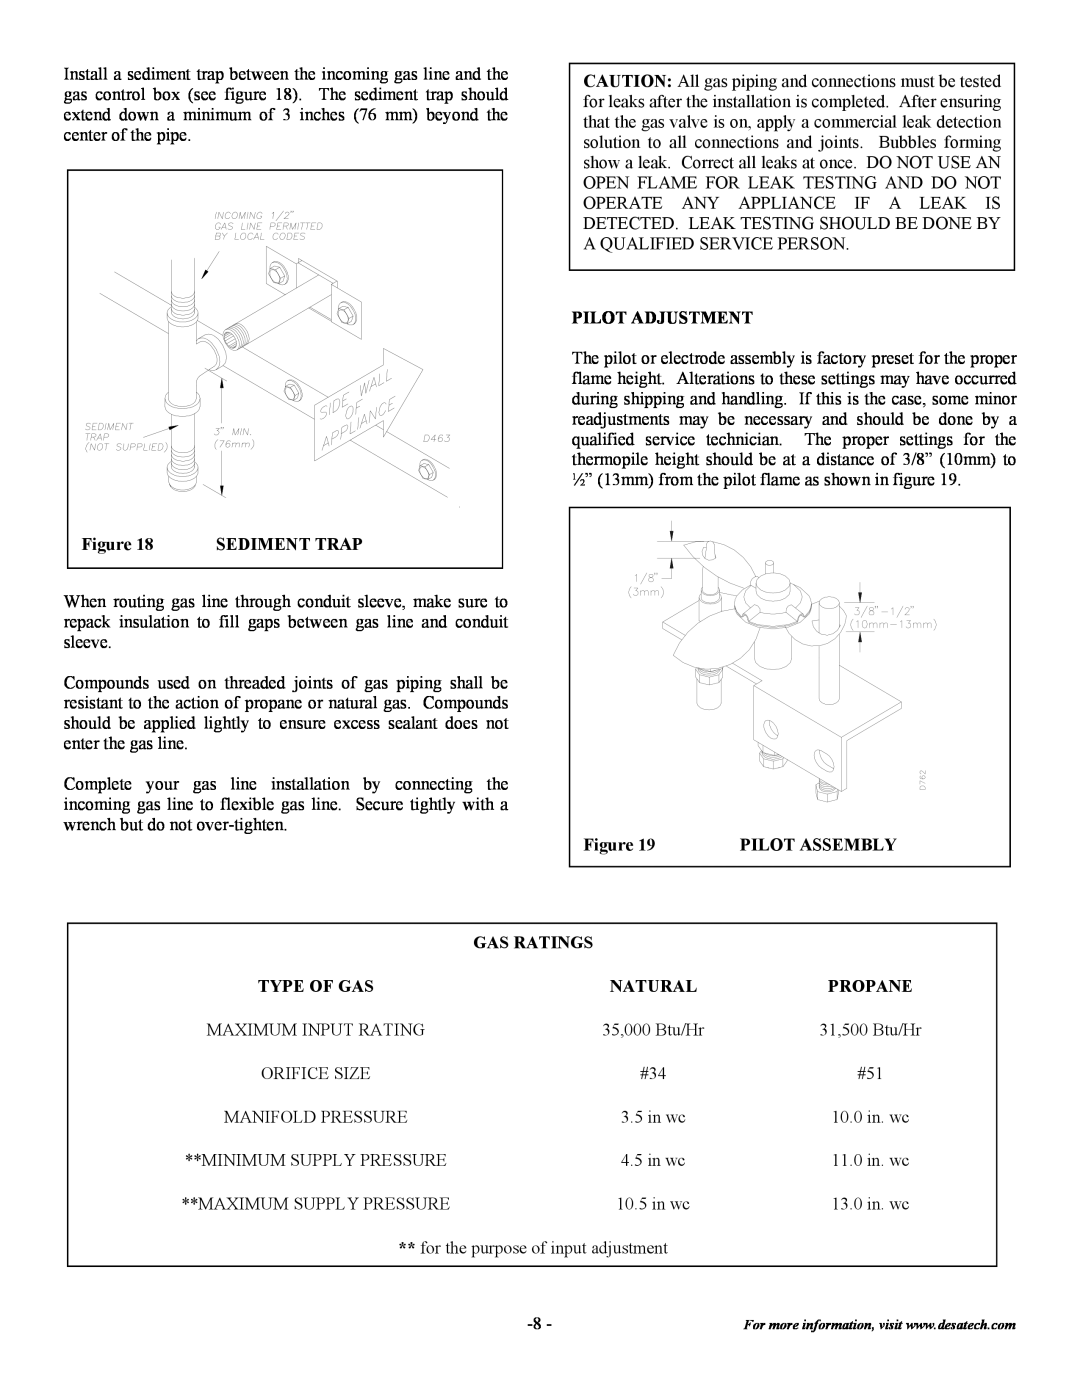 Desa DVF32TMHST Sediment Trap, Pilot Adjustment, Pilot Assembly, Gas Ratings, Type Of Gas, Natural, Propane 